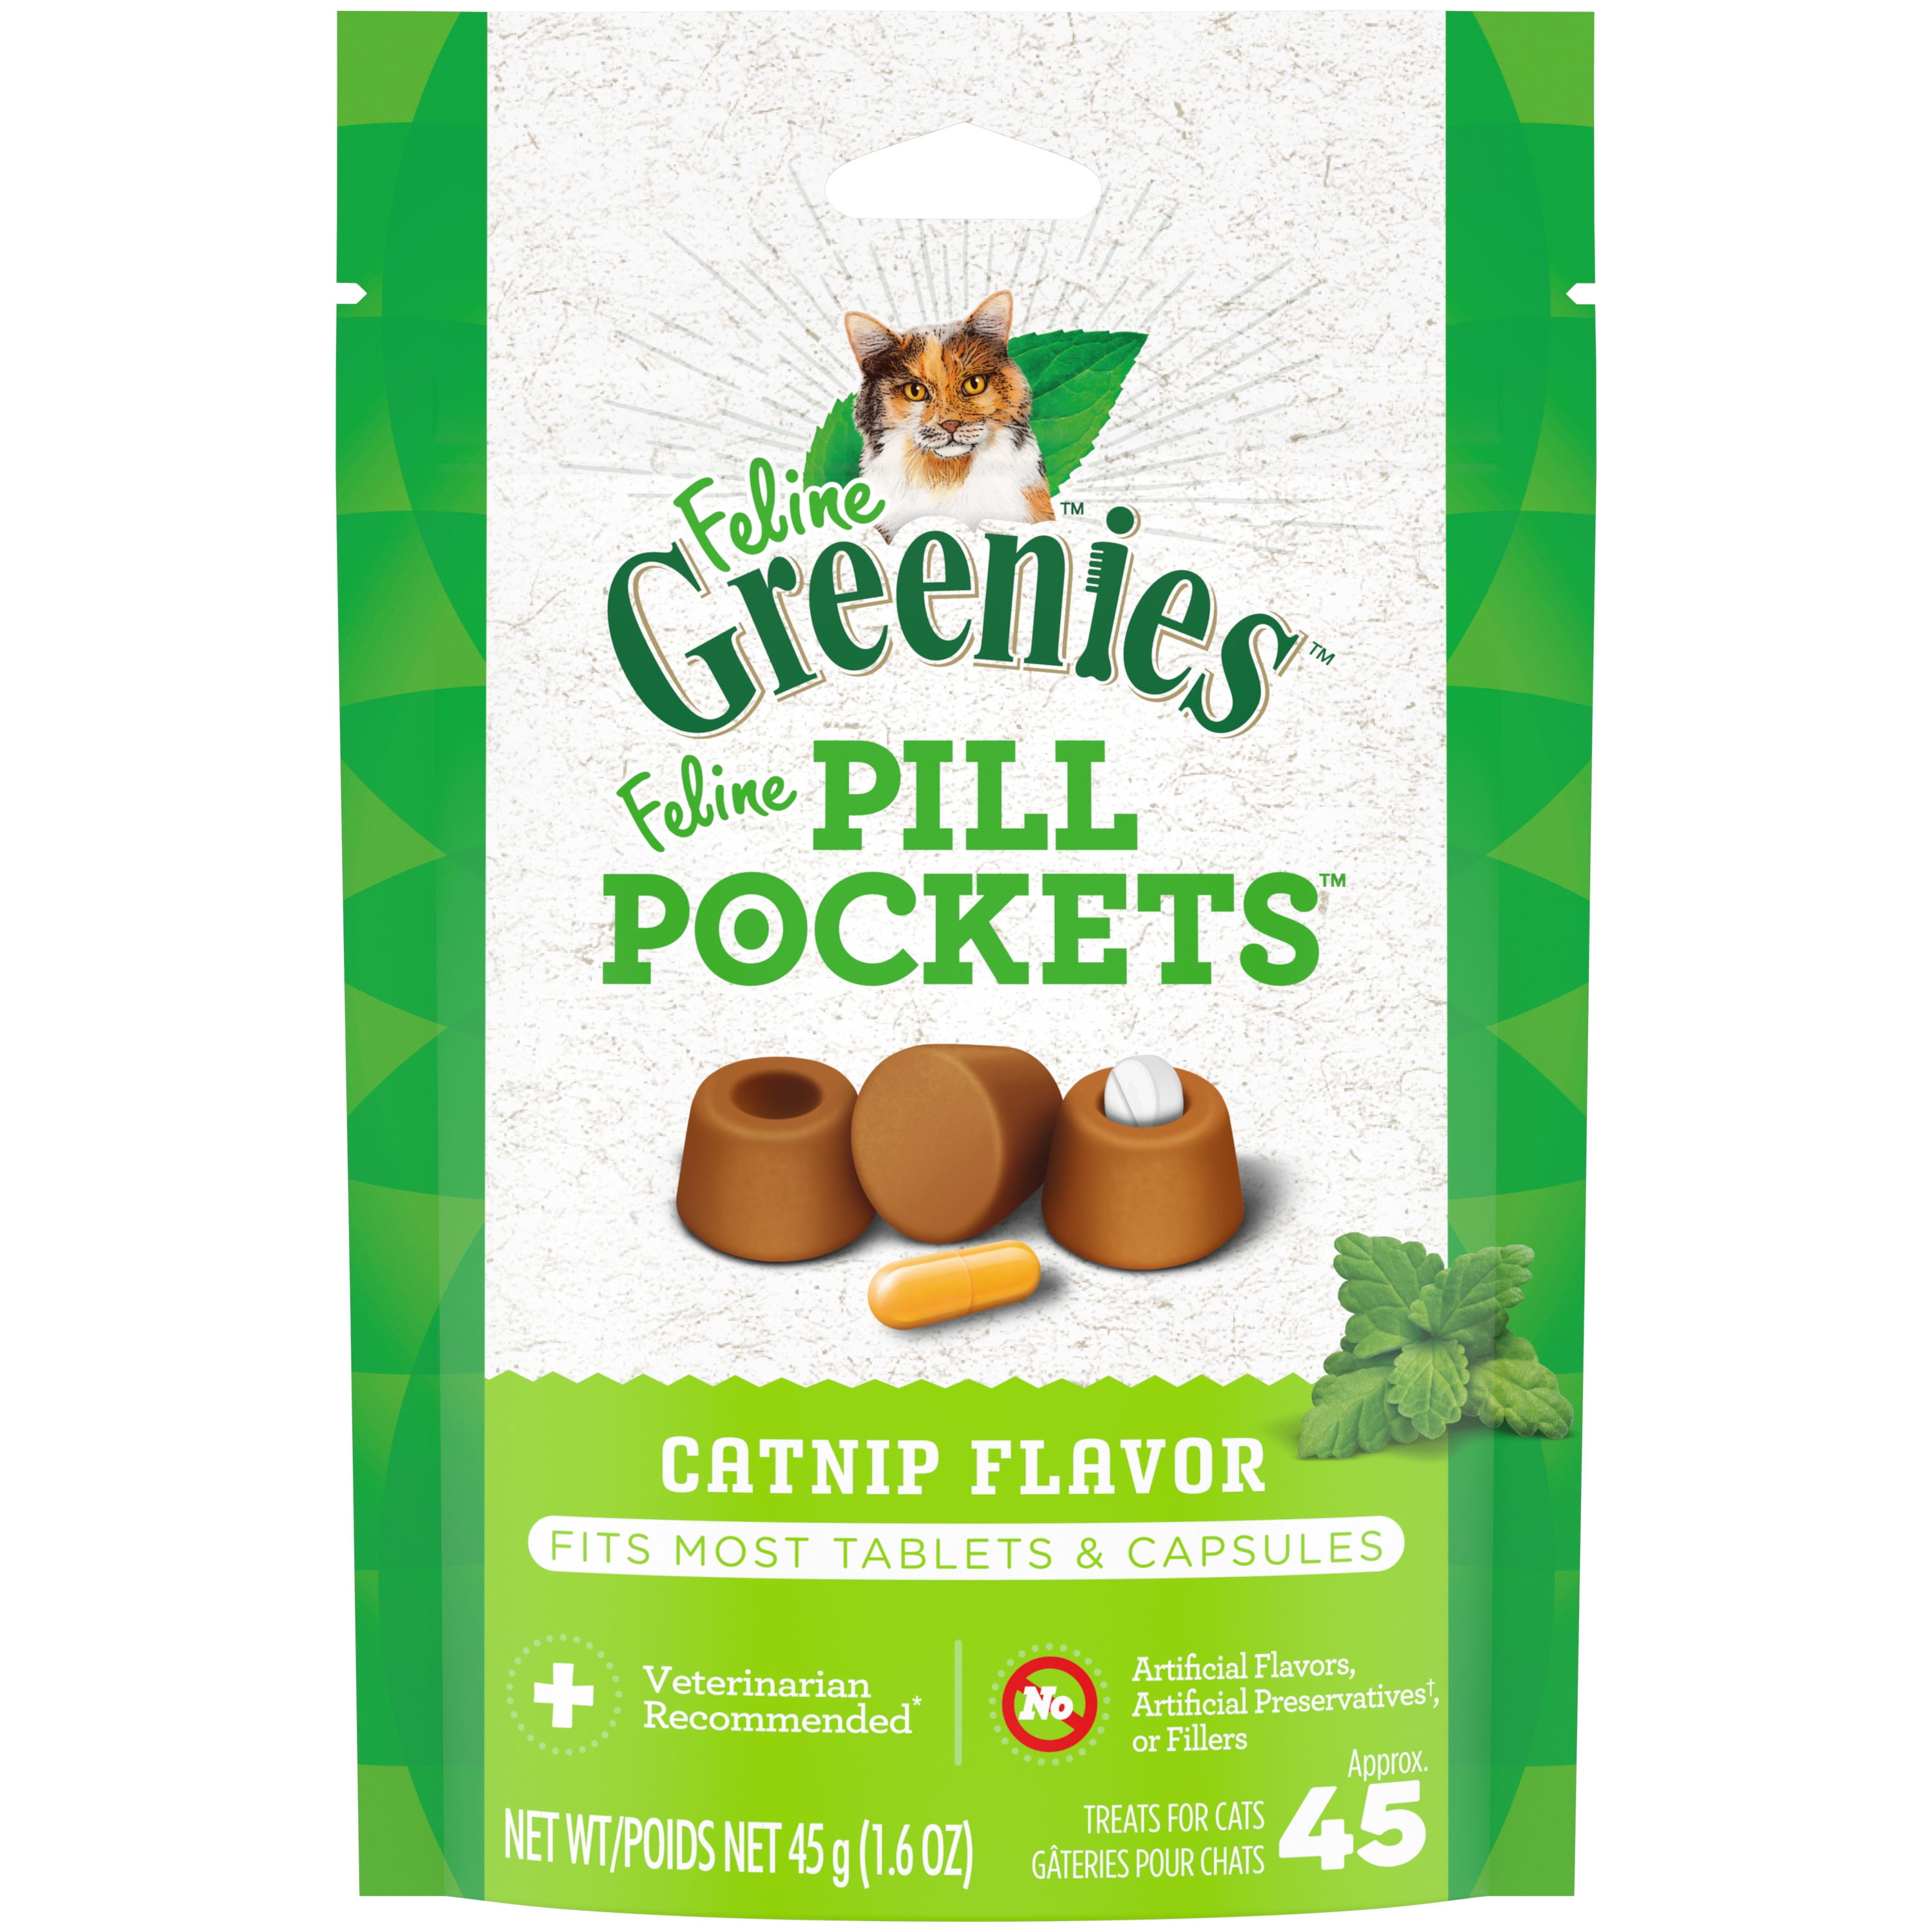 FELINE GREENIES Pill Pockets Catnip Flavor Soft Cat Treats, 1.6 oz. Pack (45 Treats)